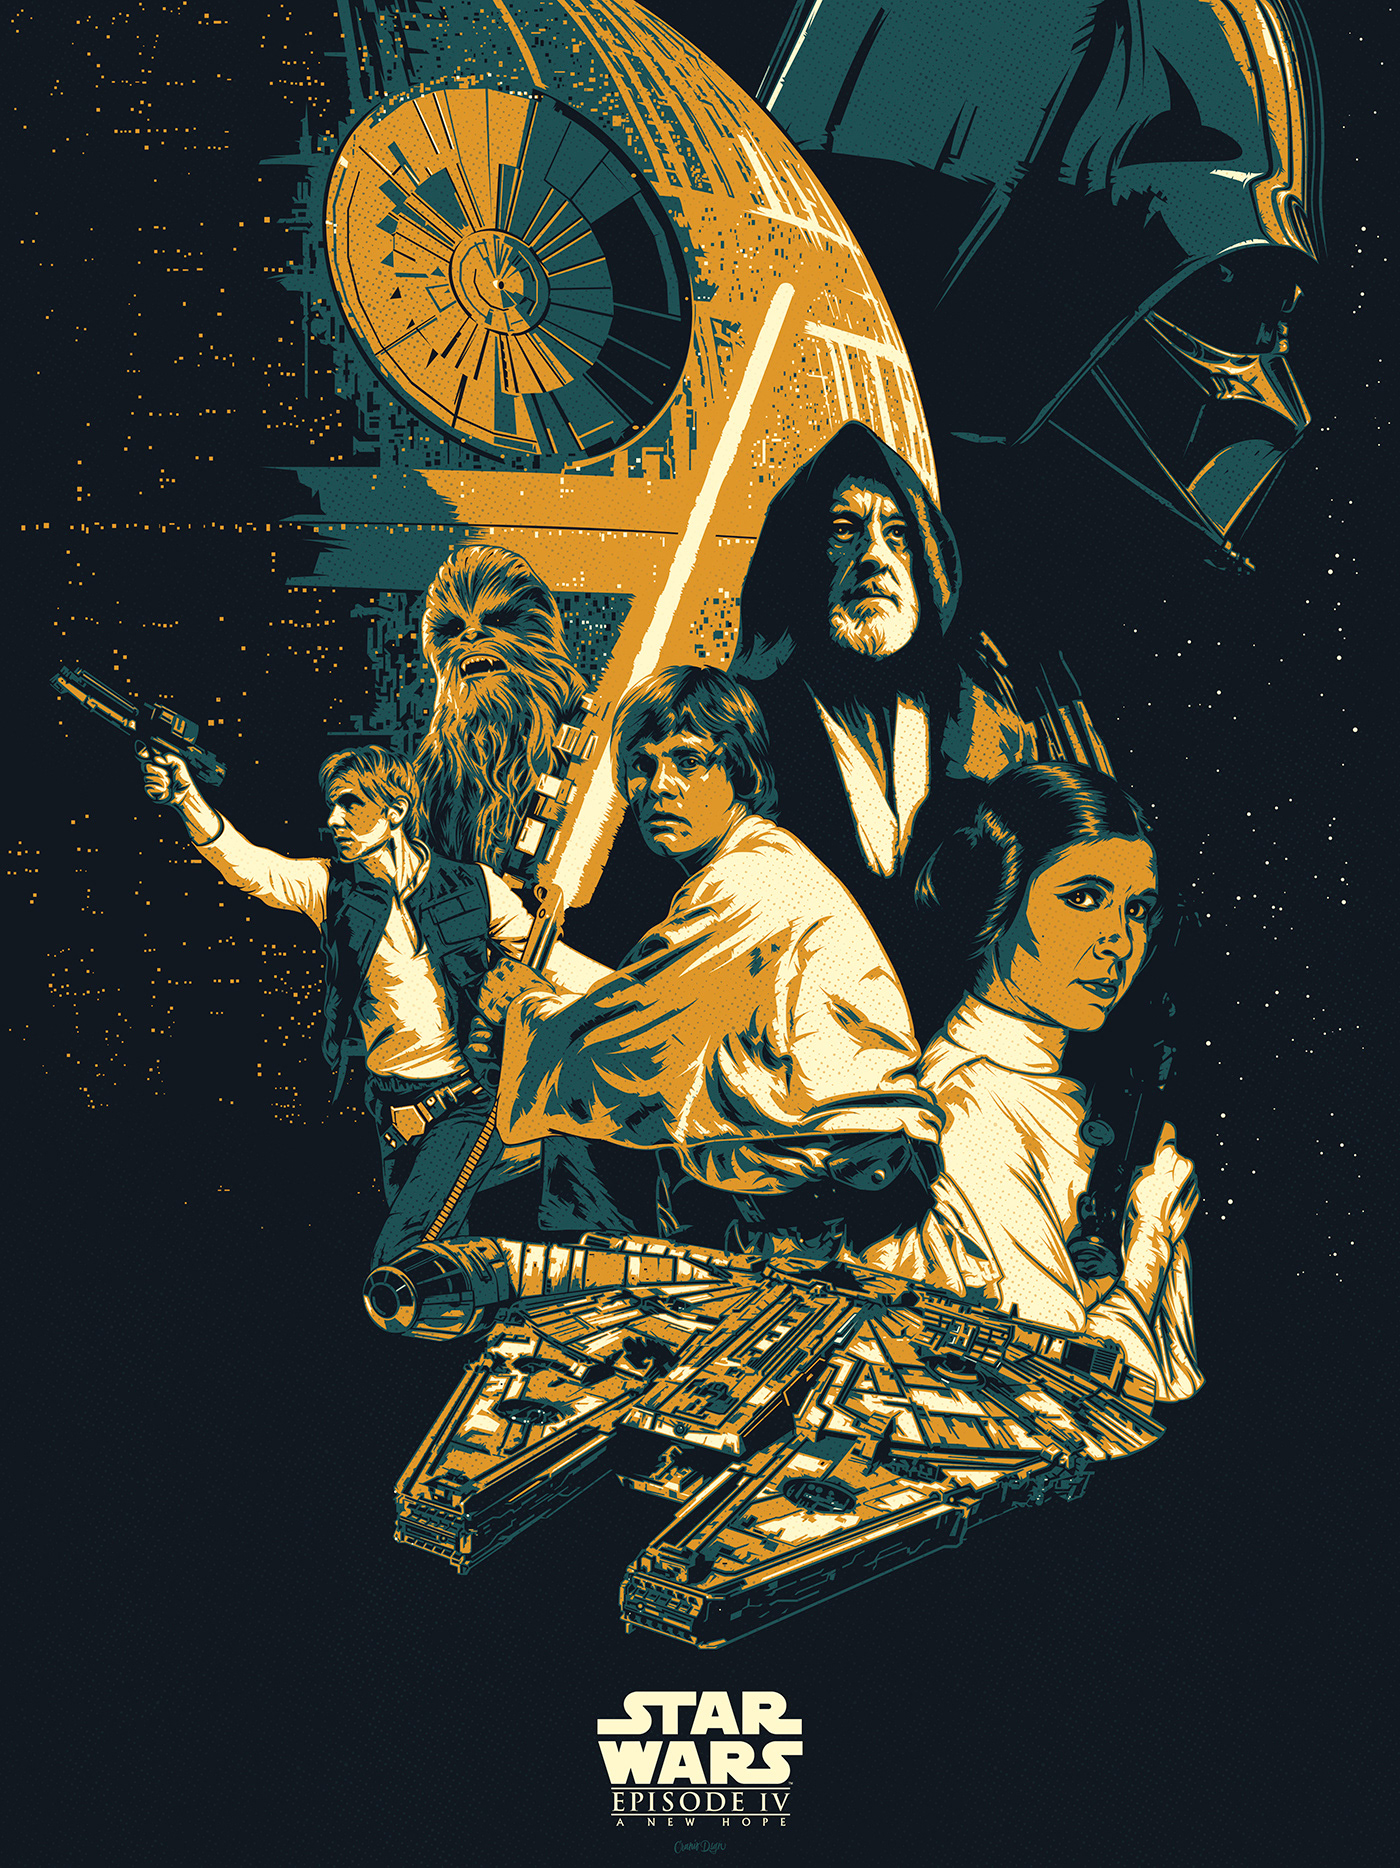 star wars darth vader luke skywalker Obi-Wan Kenobi Han Solo Leia millennium falcon Chewbacca death star